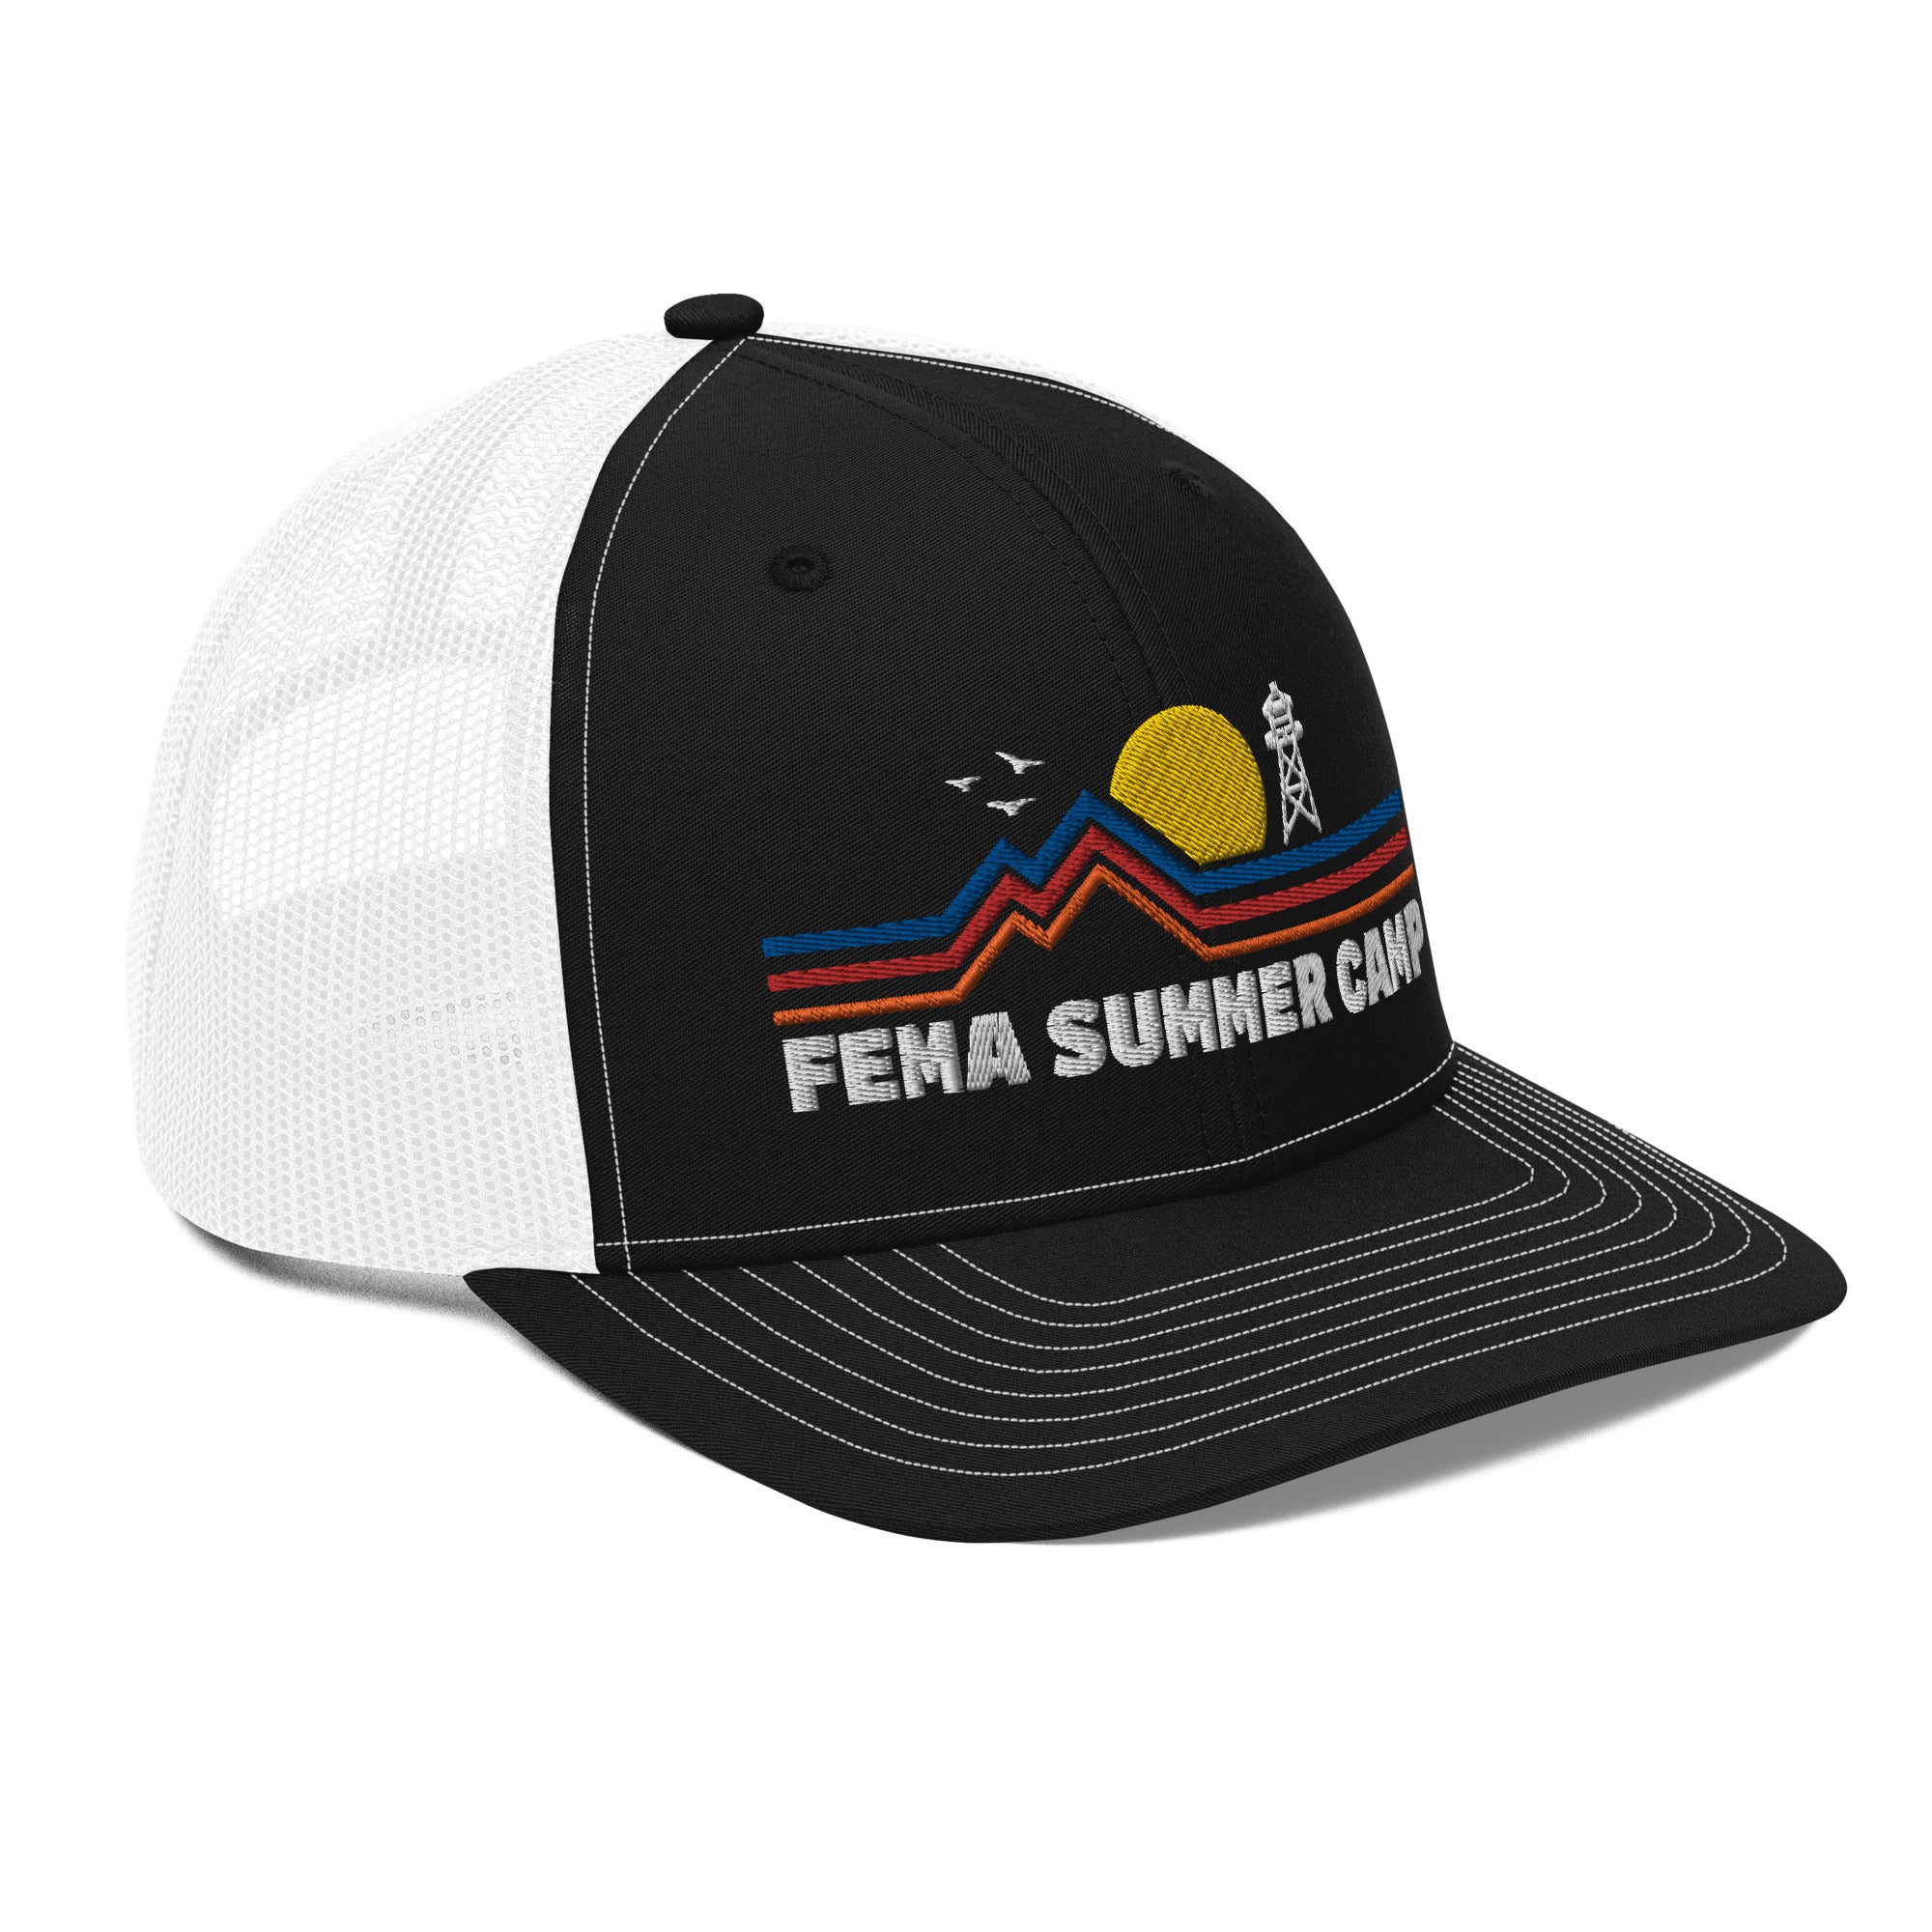 FEMA Summer Camp Trucker Cap